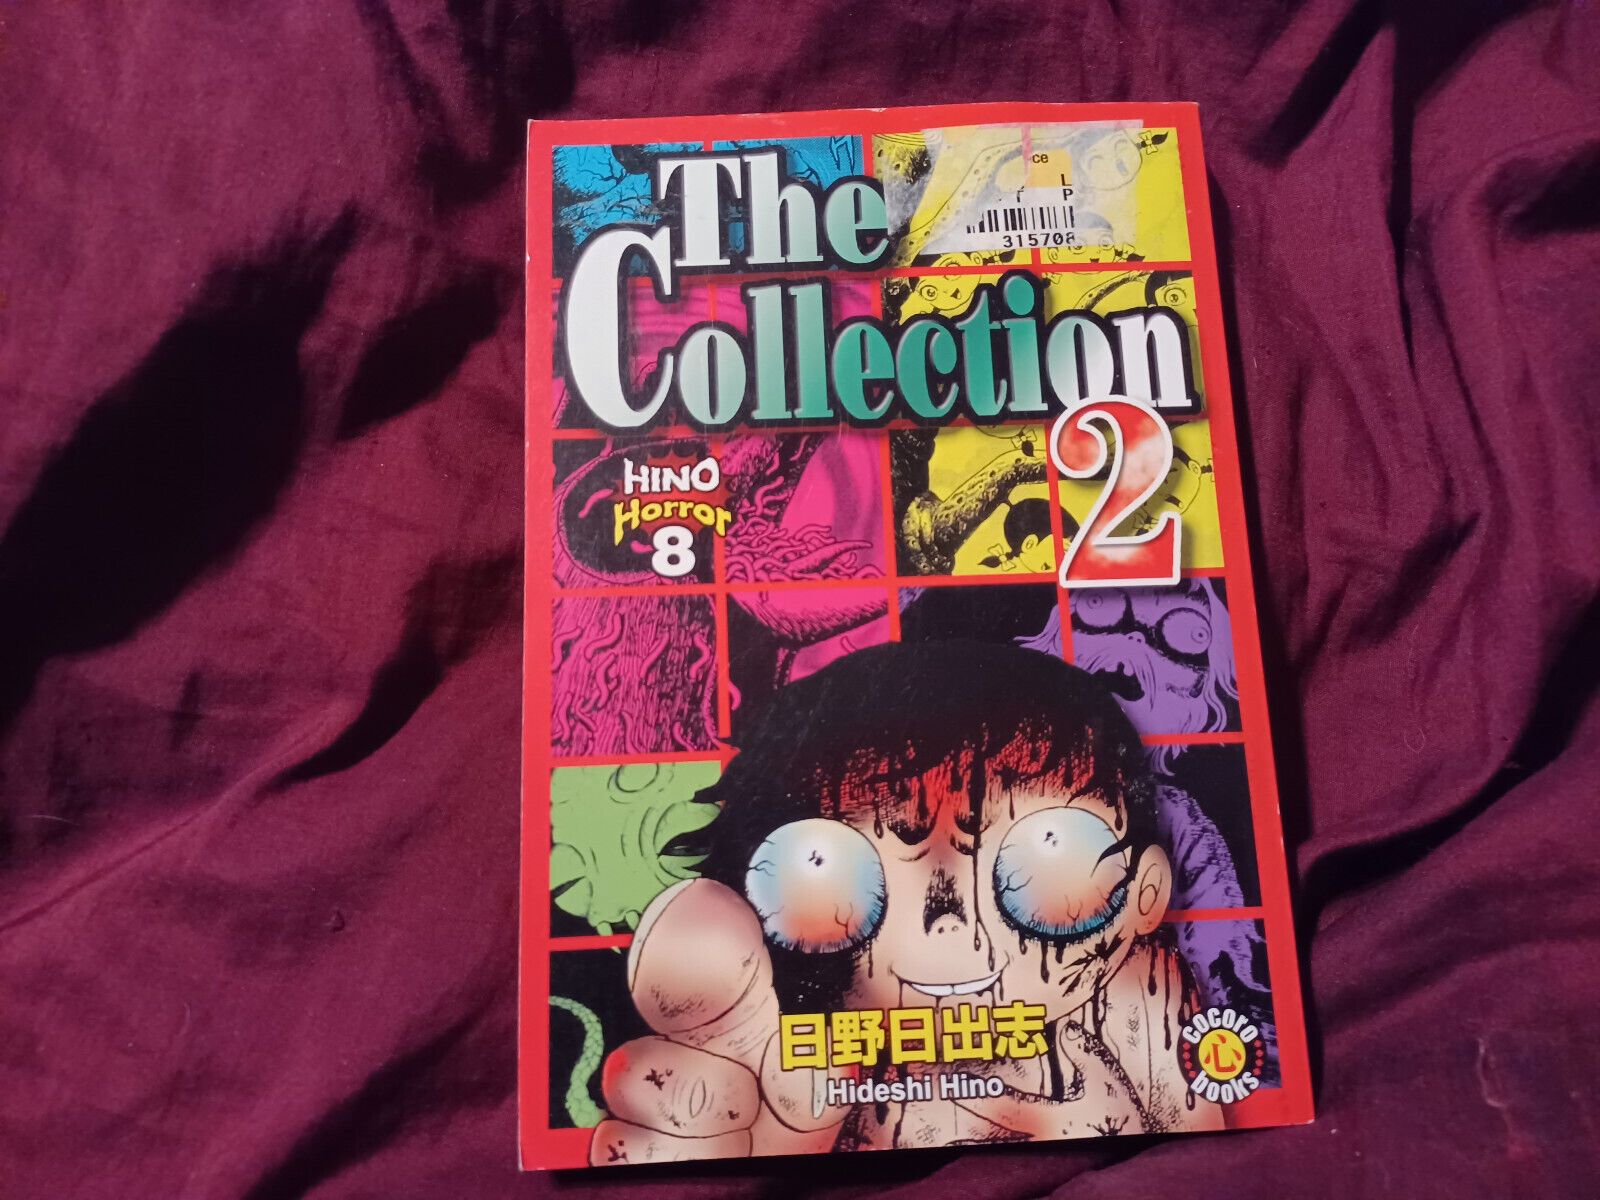 Hino Horror #8 The Collection 2 (Manga, 2004)